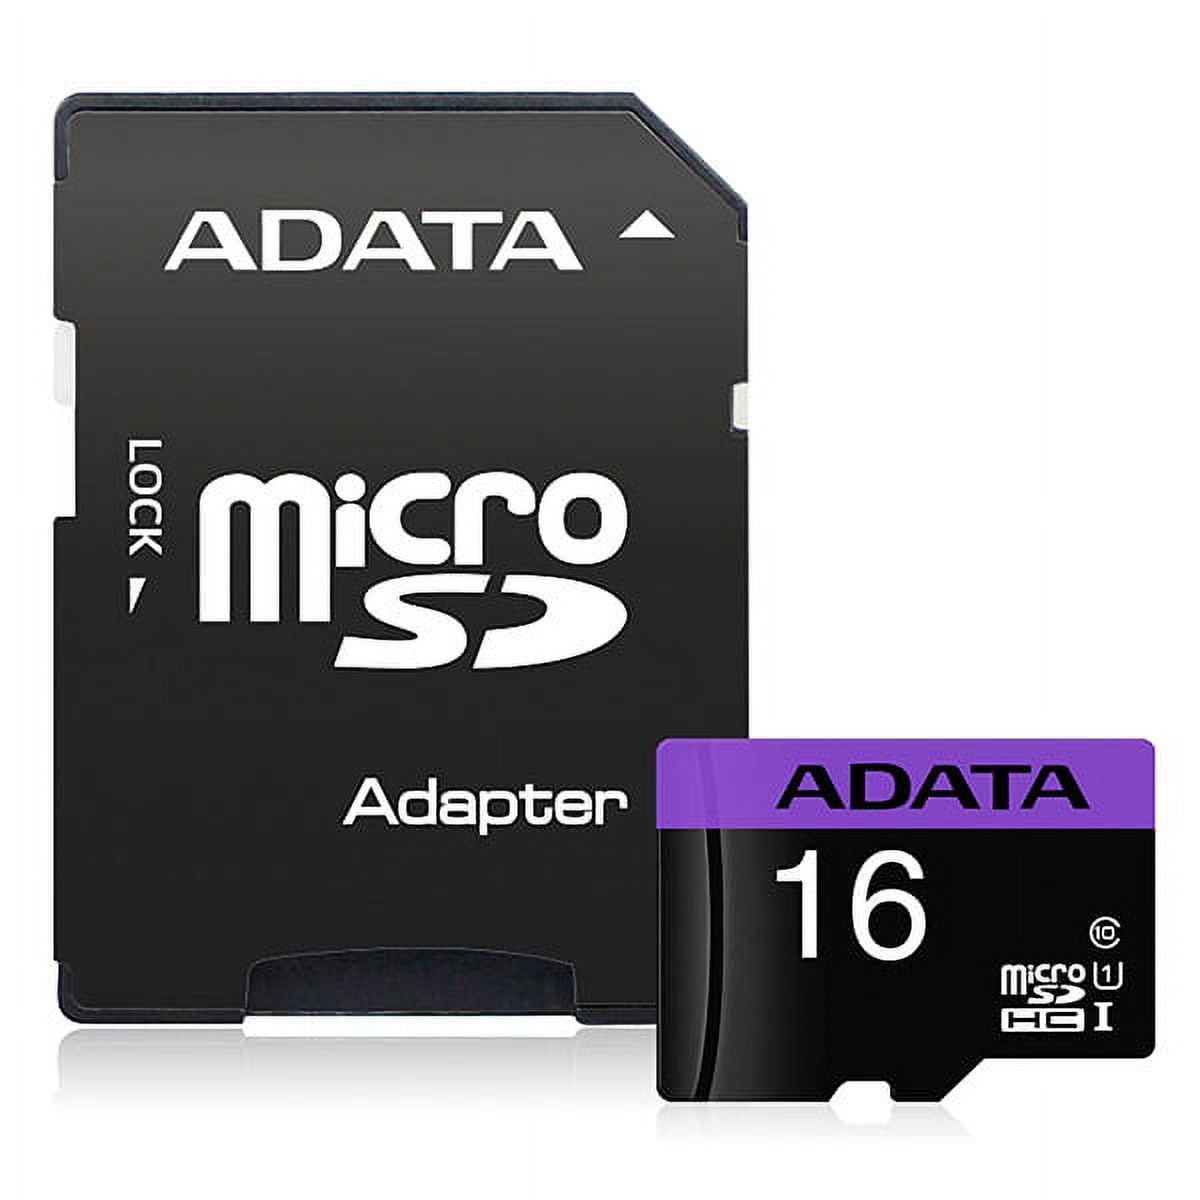 100% Wholesale 2gb 64GB 128GB 256GB Flash TF Memory Cards Class 10 U3 A1  Memory Custom Printing LOGO Micro SD Card